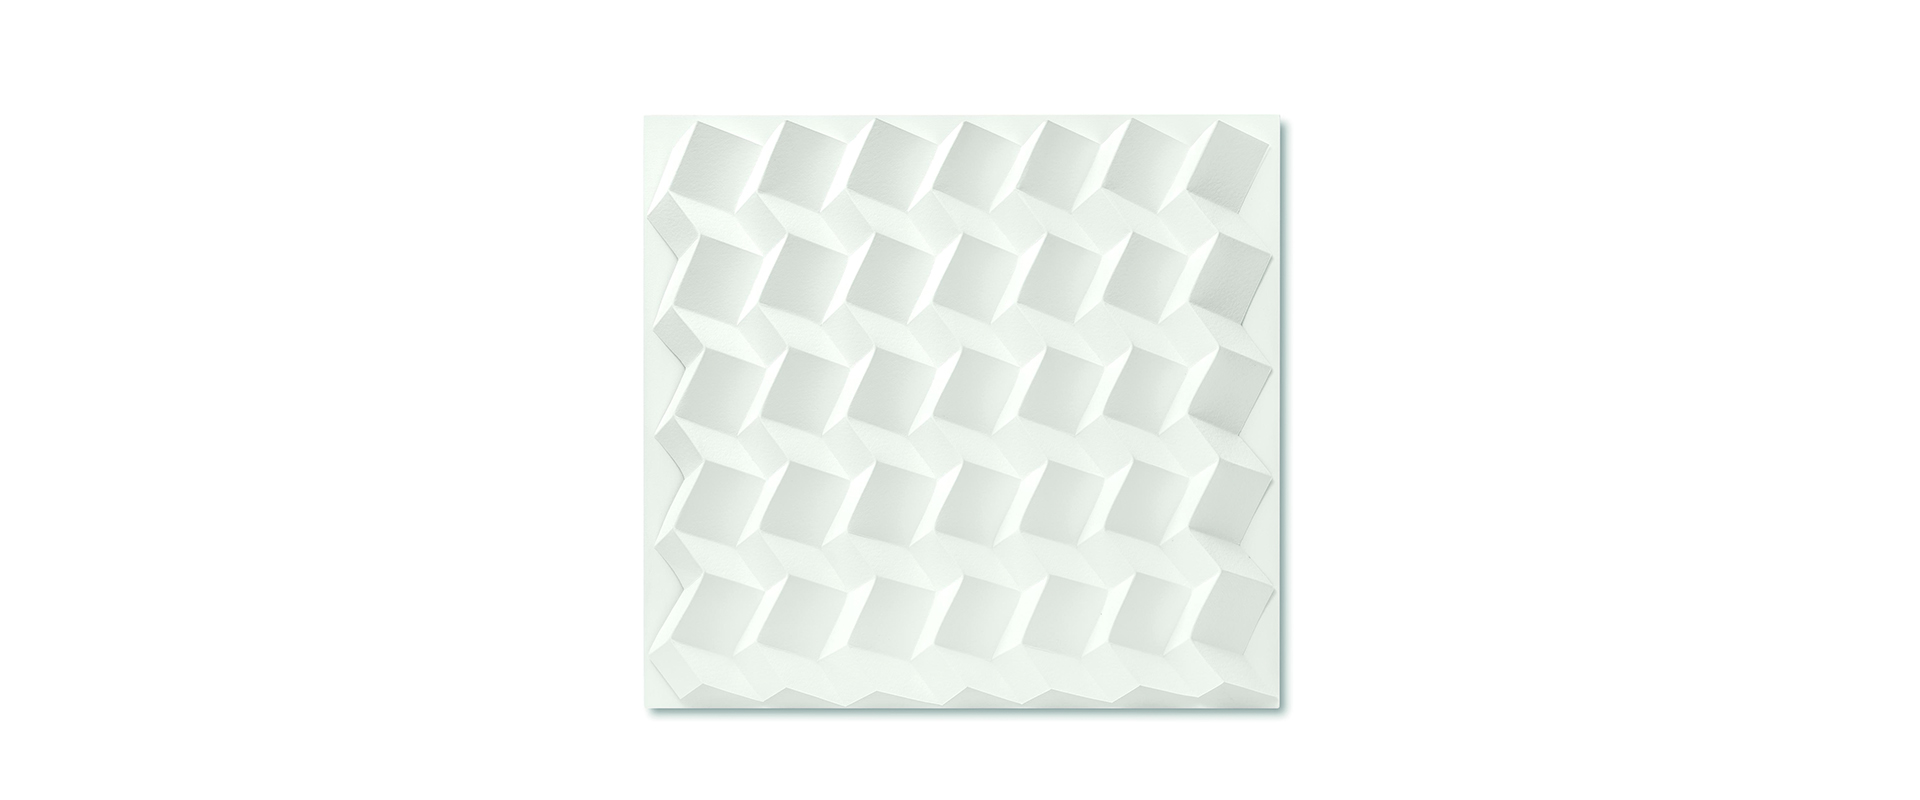 Peter Weber, Vertikale Struktur (isomorph 35) – 2021, Fabriano Bütten 640g/qm, gefaltet, Acrylglashaube, 72 x 76 x 8,5 cm